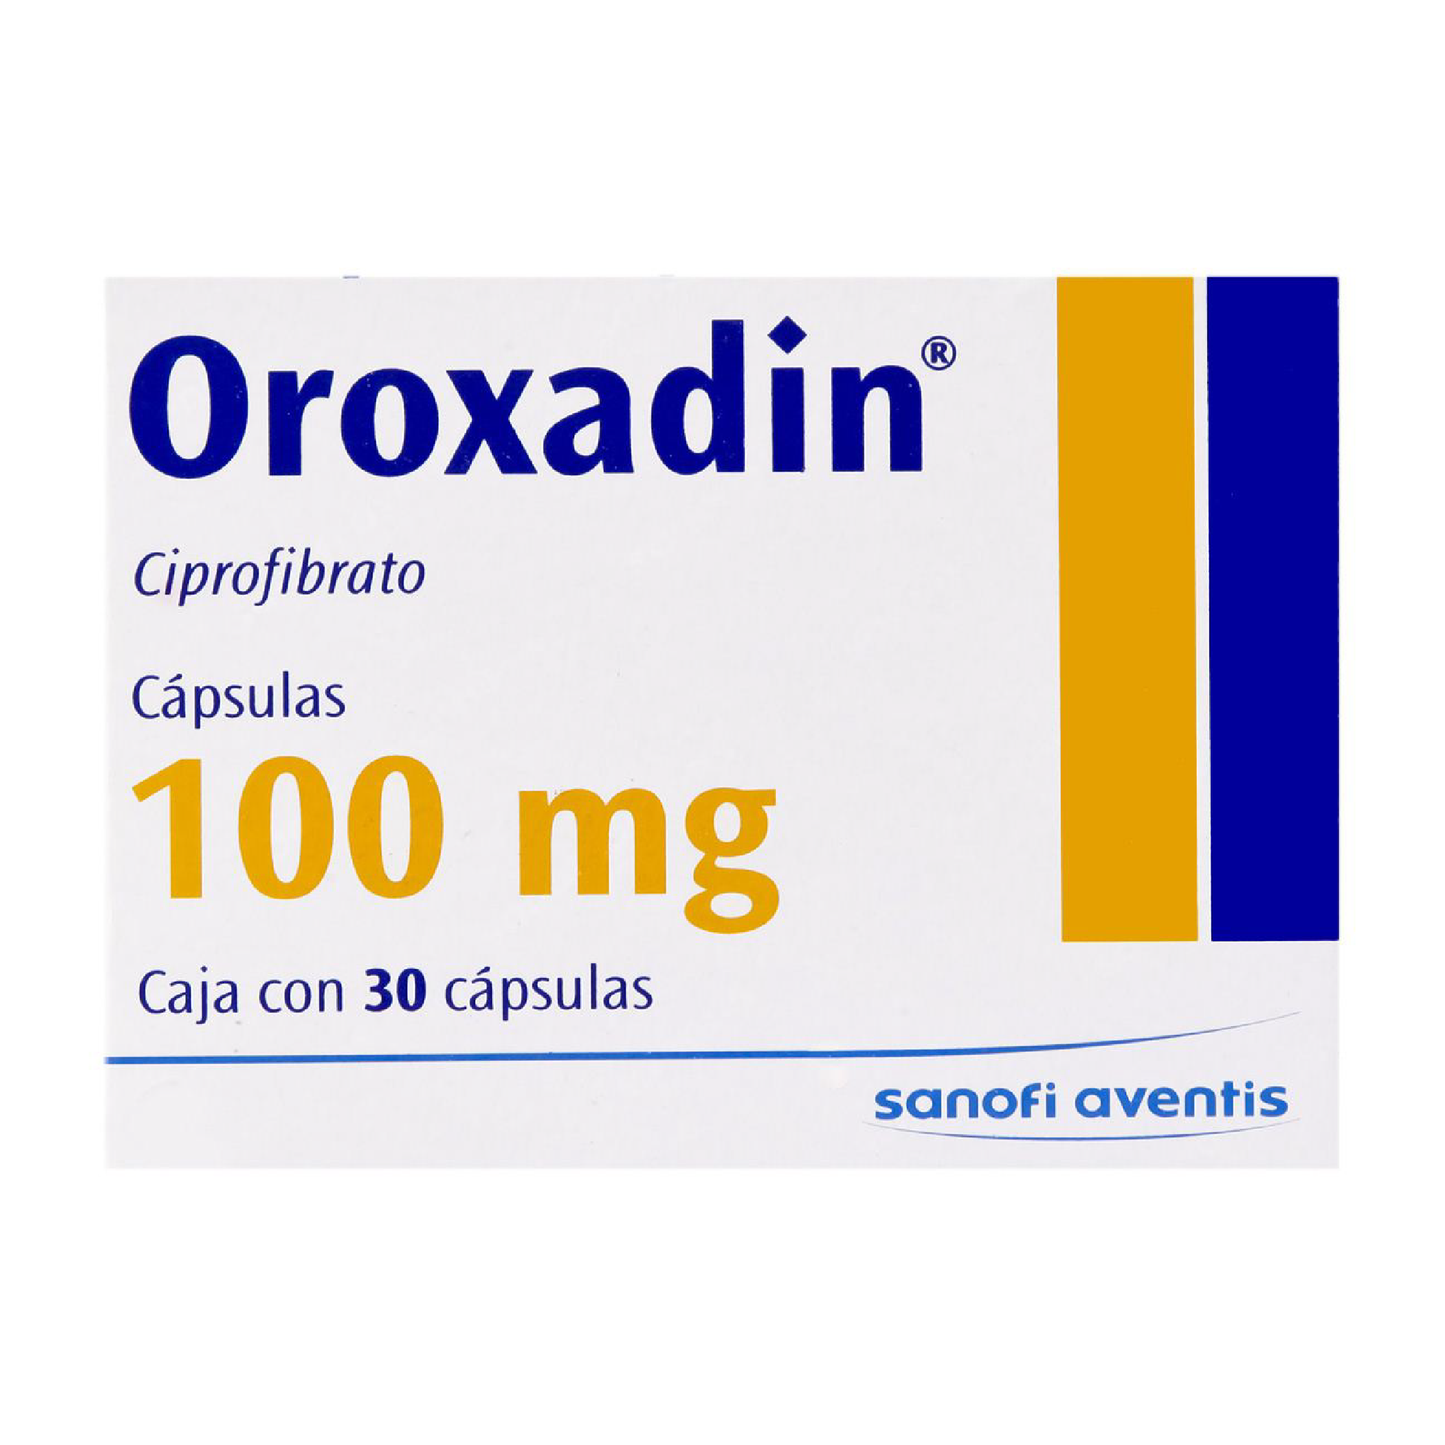 Oroxadin (Ciprofibrato) Cap 100mg Cja/30 caps